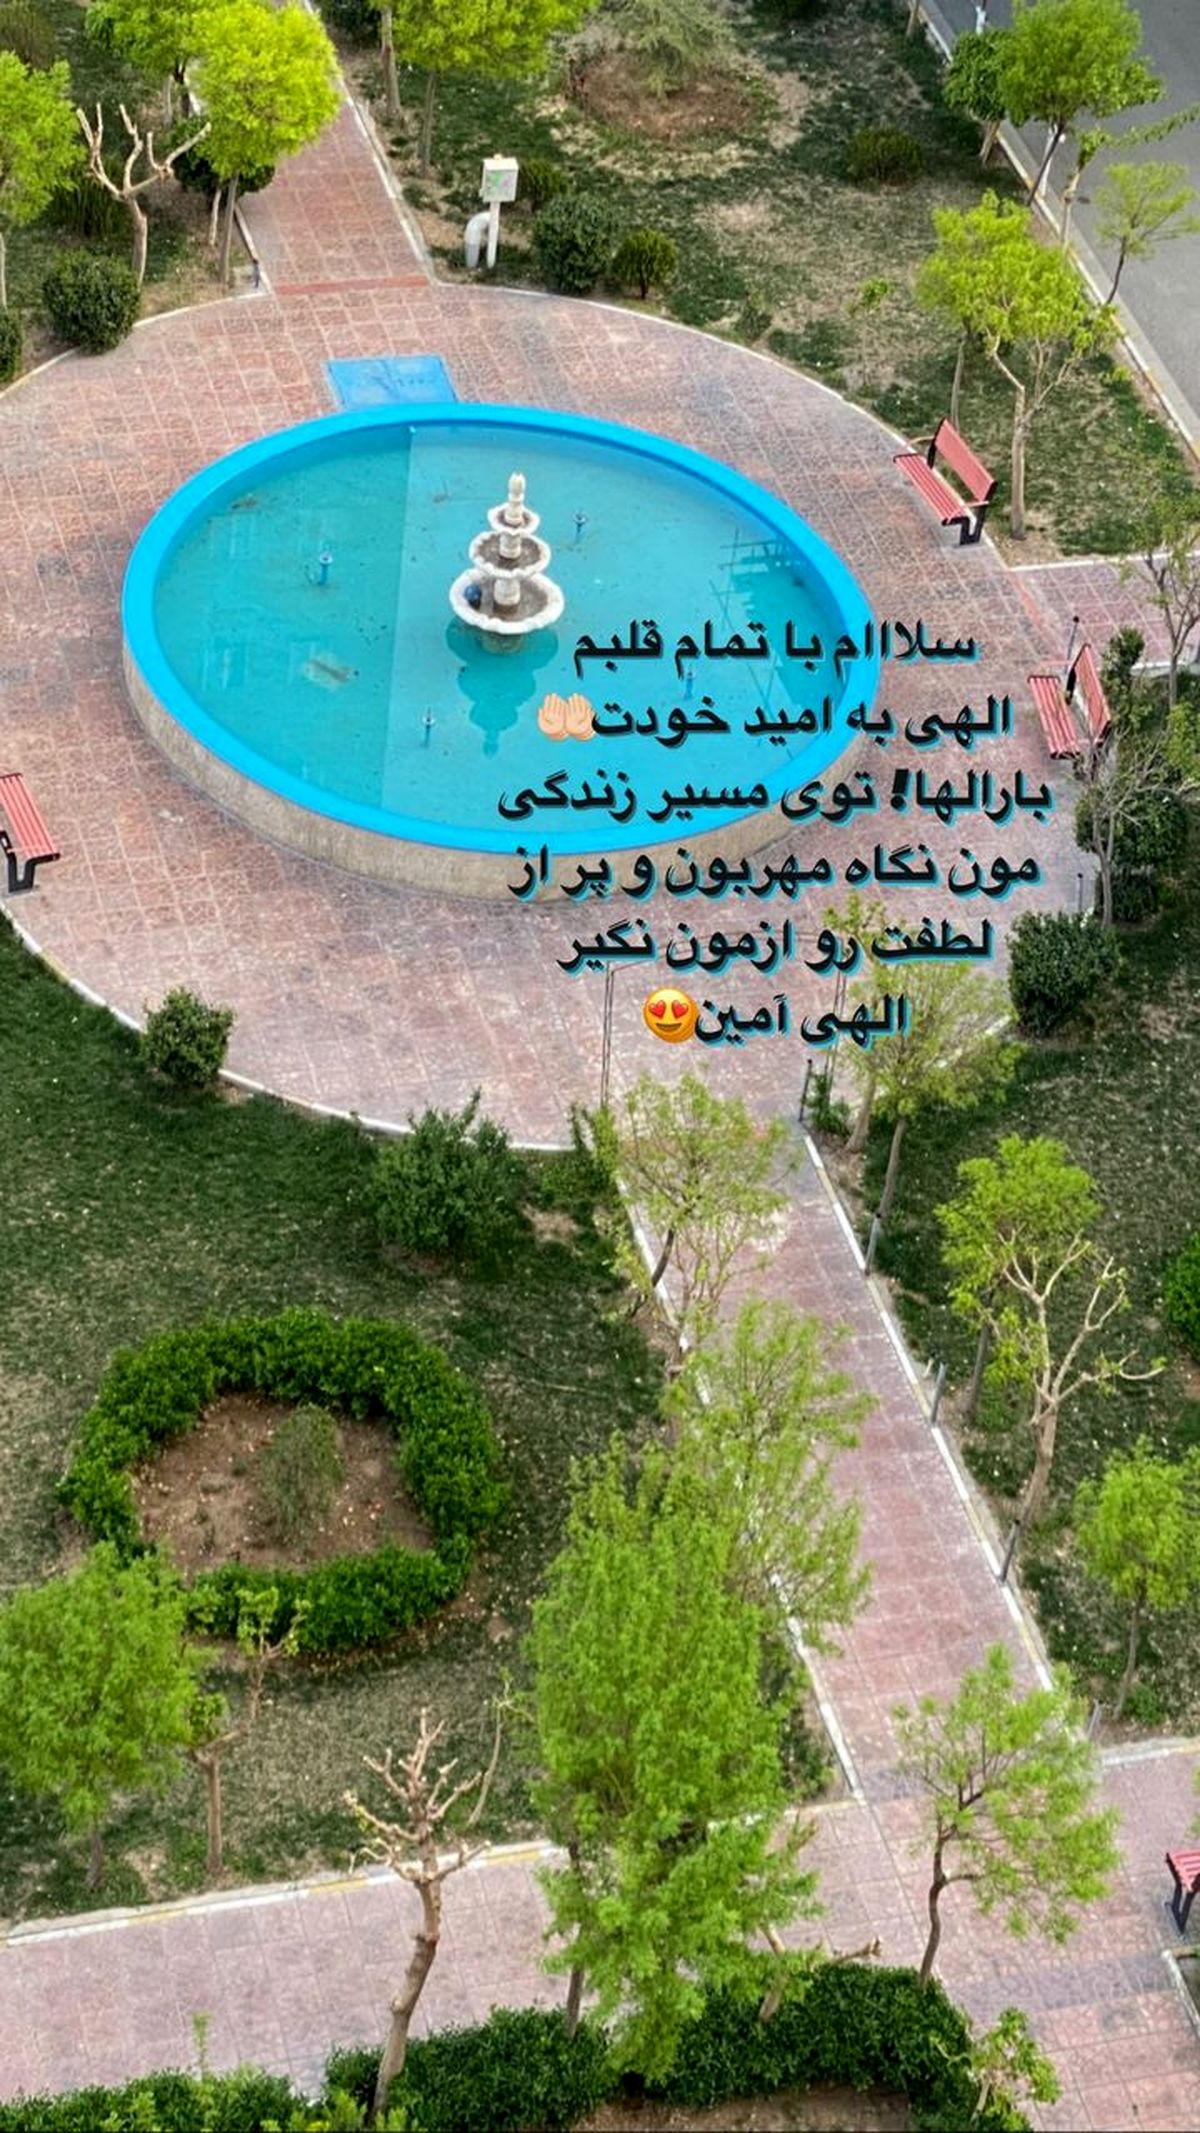 sabarad.official_s instagram 2023-4-6 story